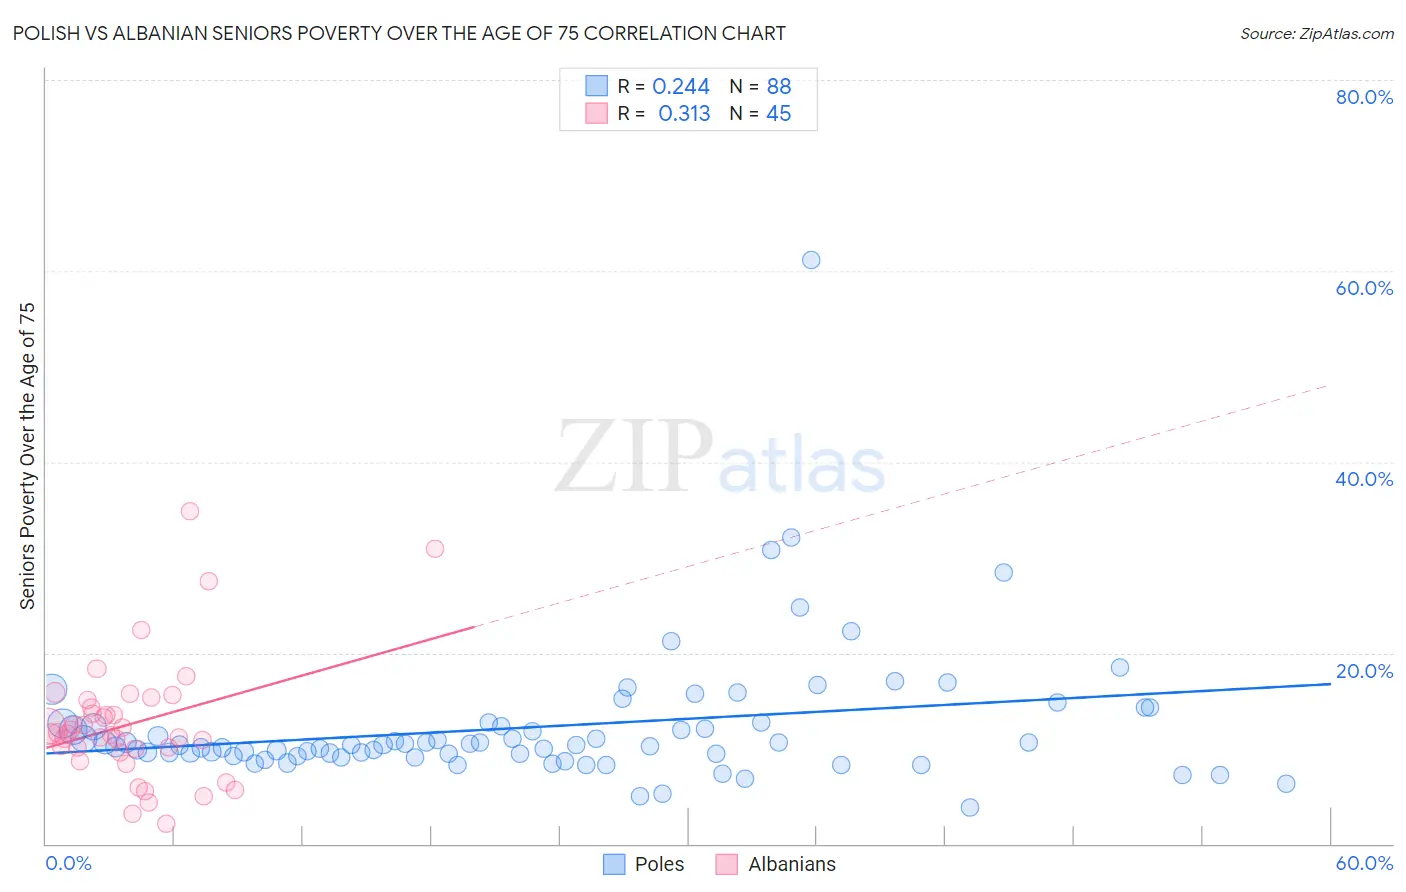 Polish vs Albanian Seniors Poverty Over the Age of 75